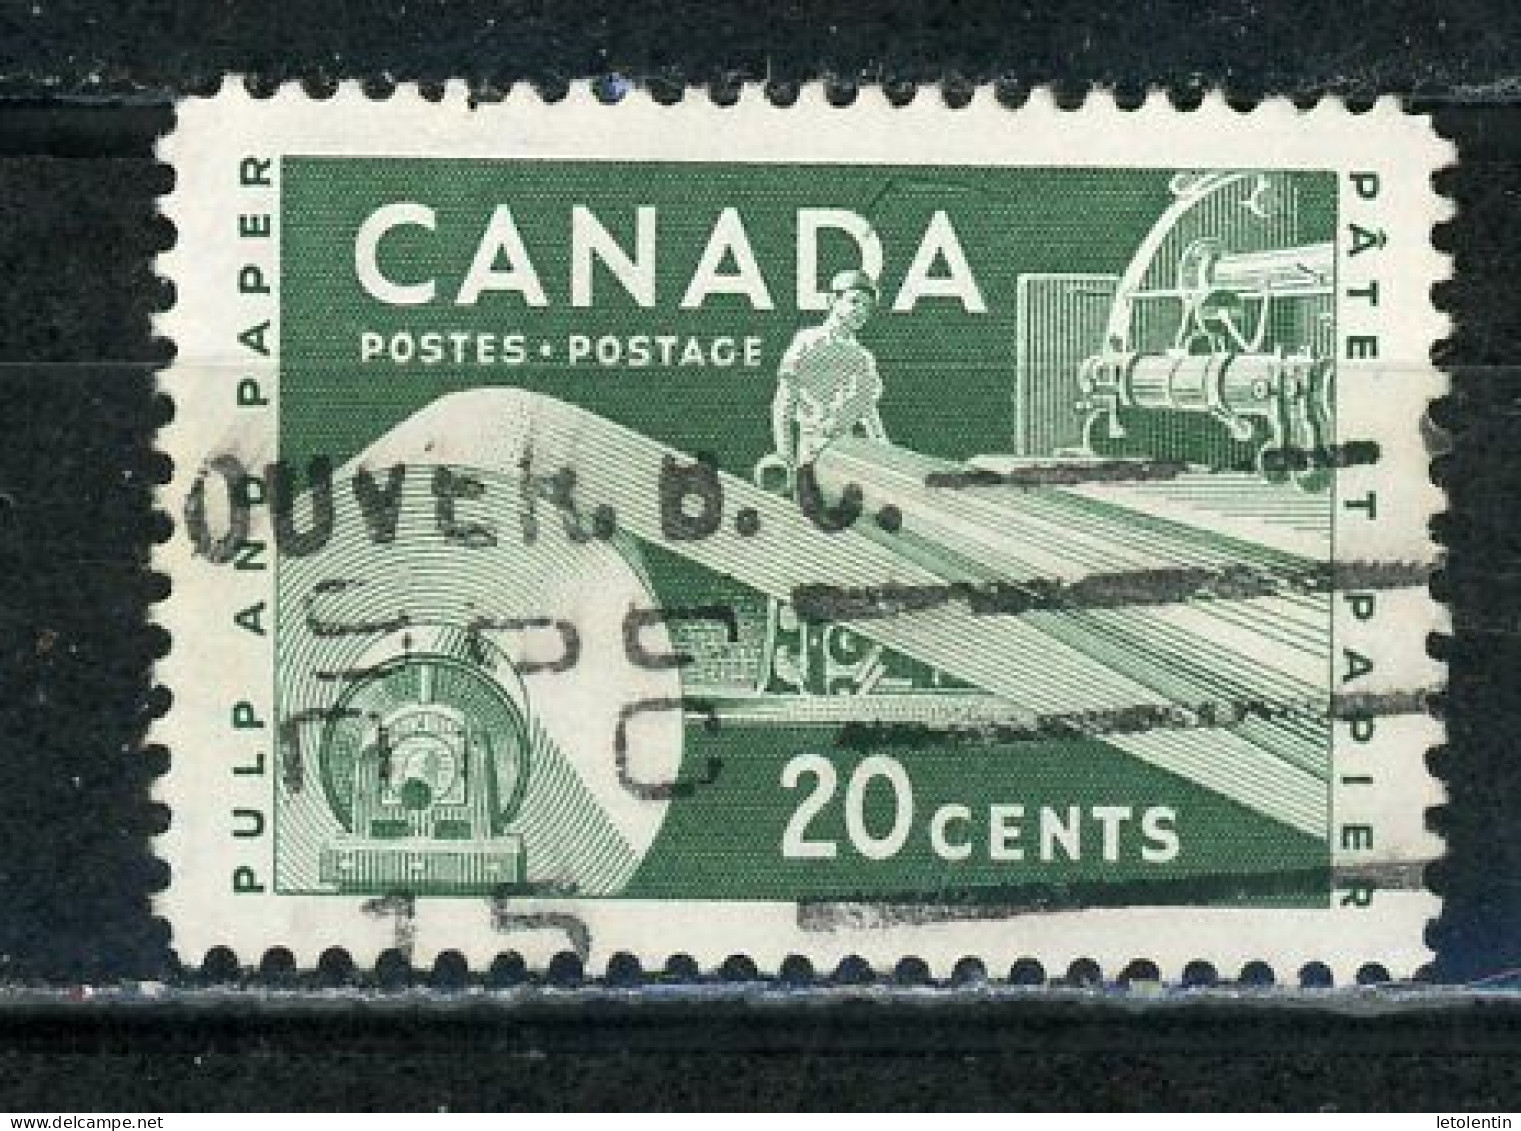 CANADA - INDUSTRIE DU PAPIER - N° Yvert 289 Obli. - Used Stamps